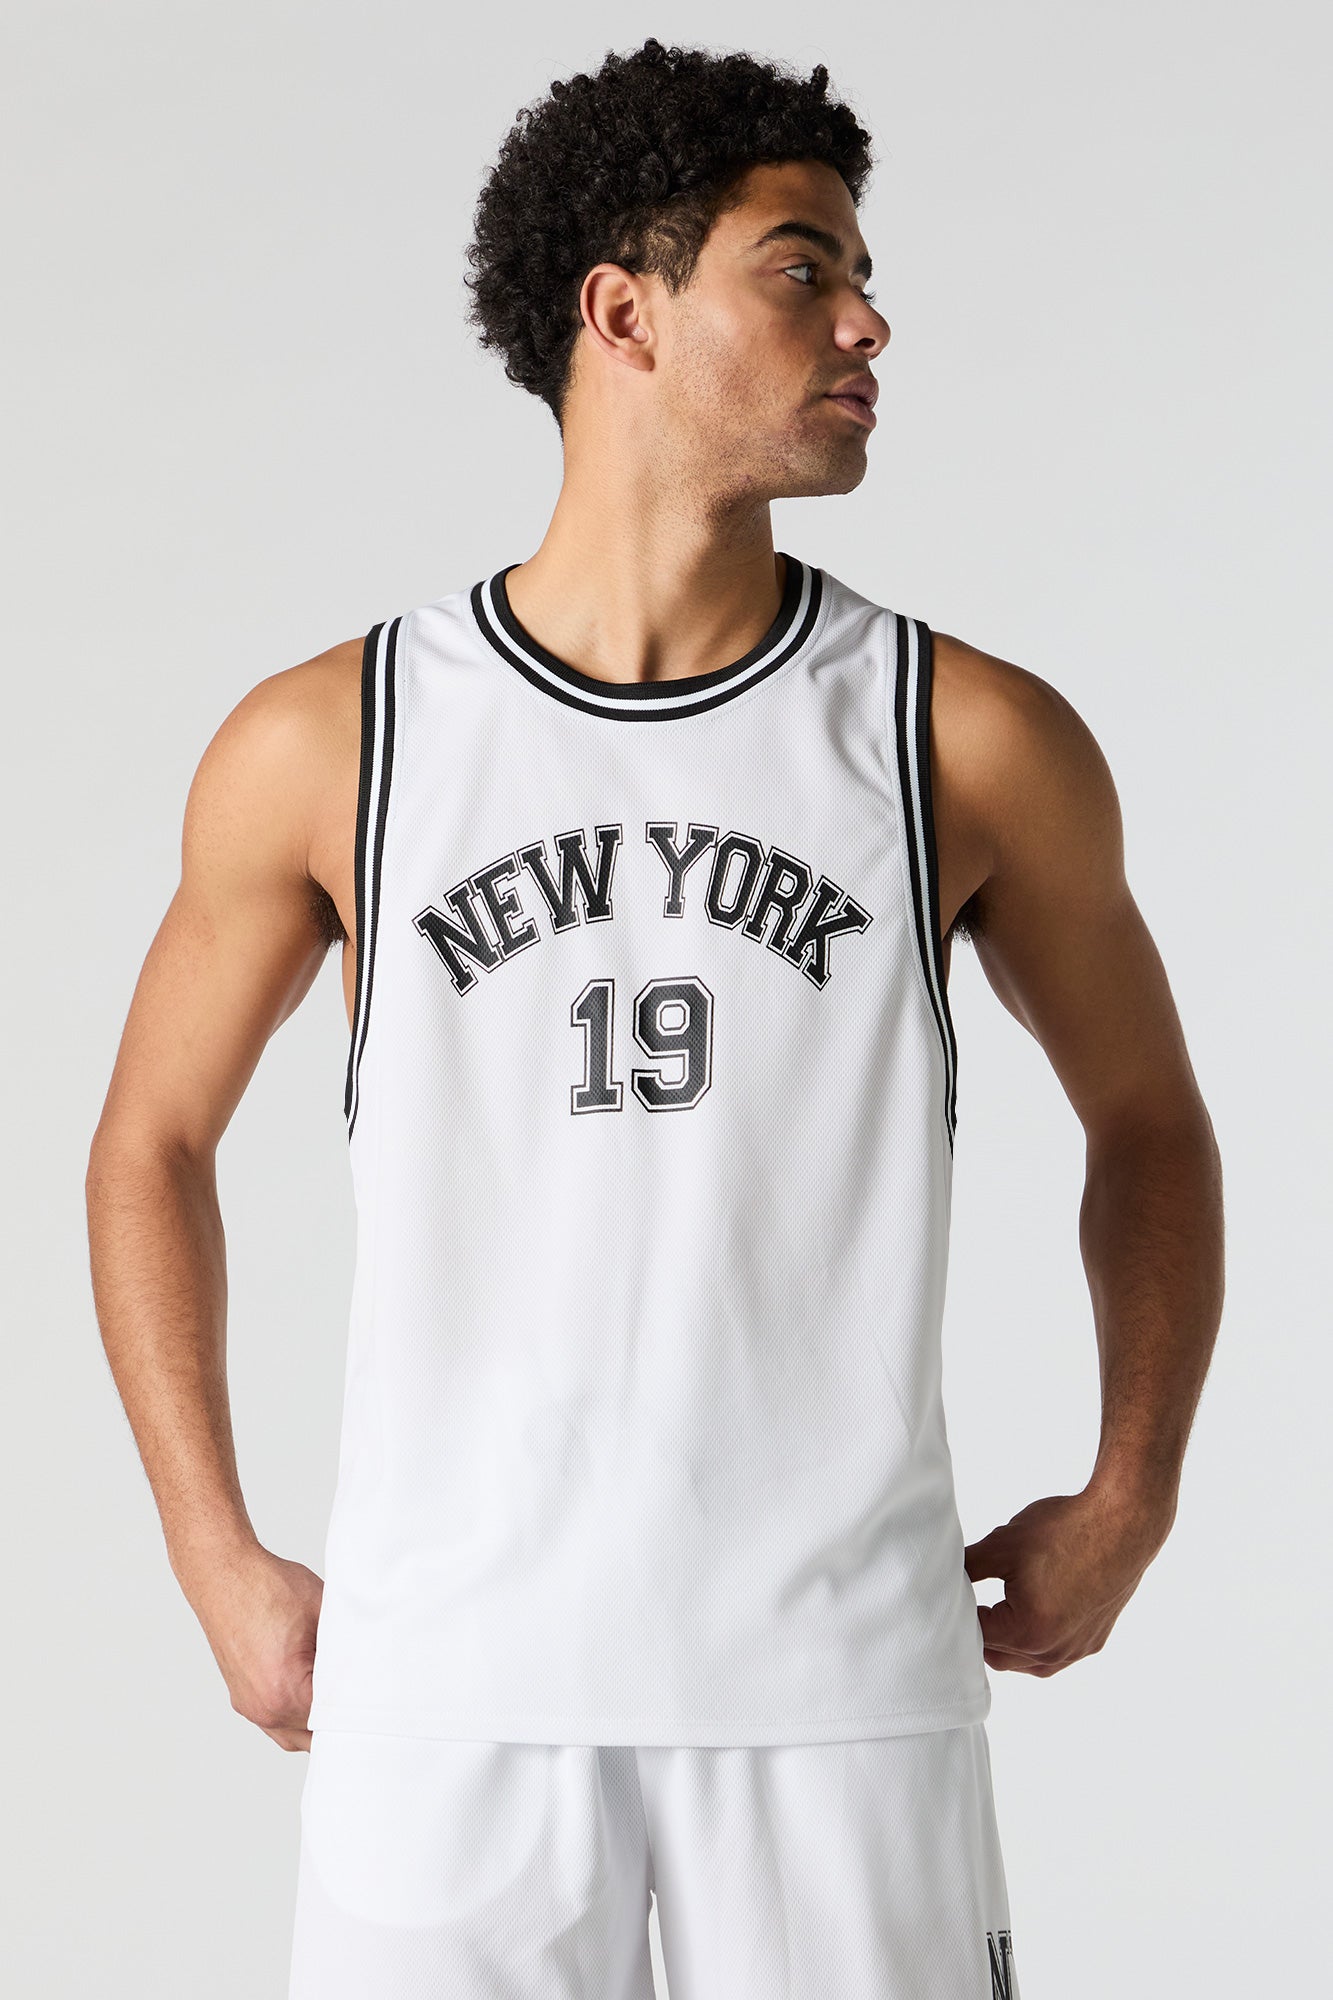 New York Graphic Mesh Basketball Jersey